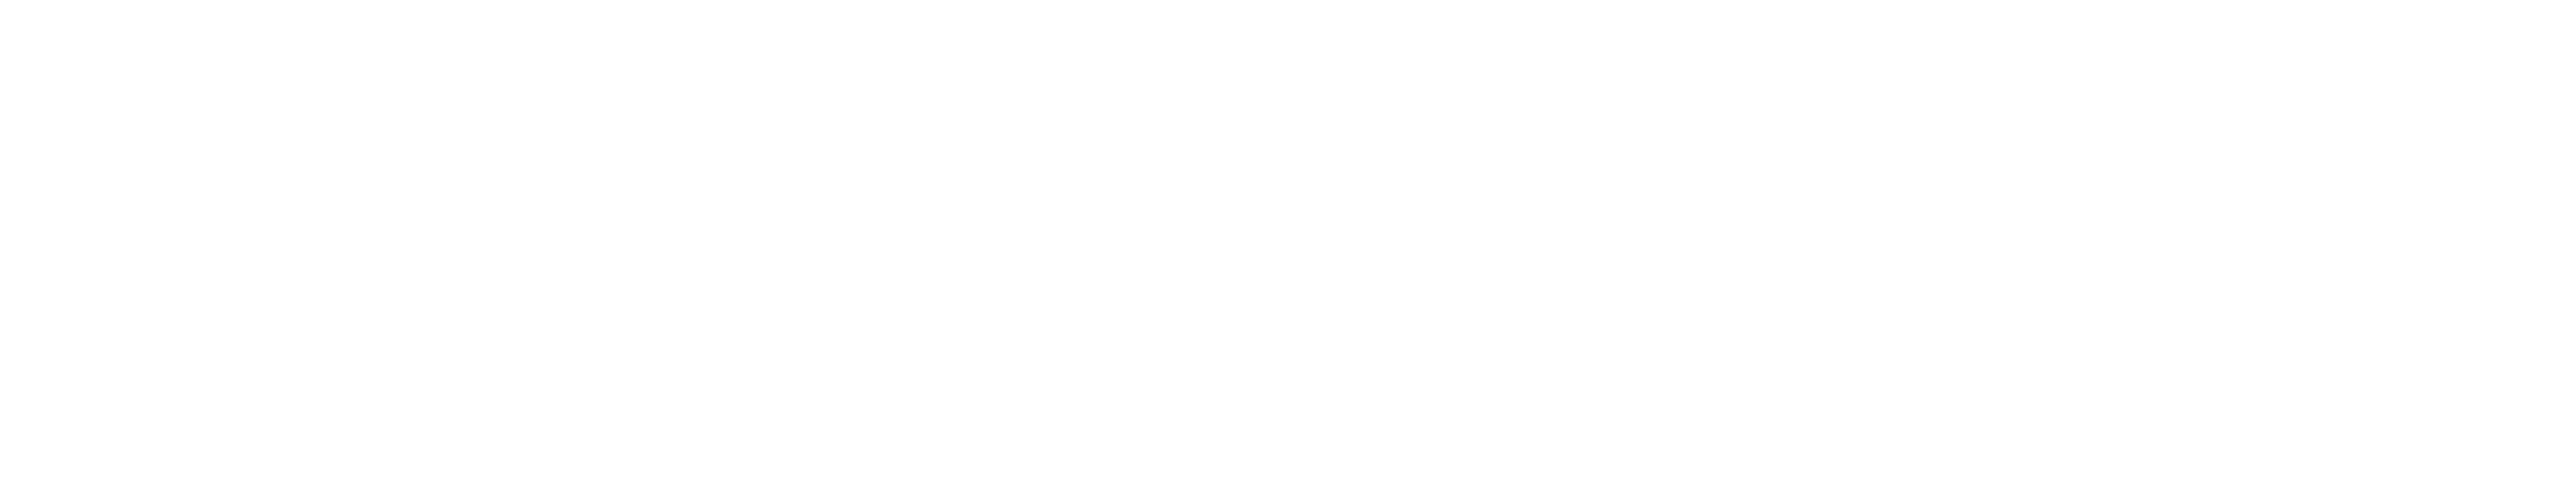 University of Texas System logo